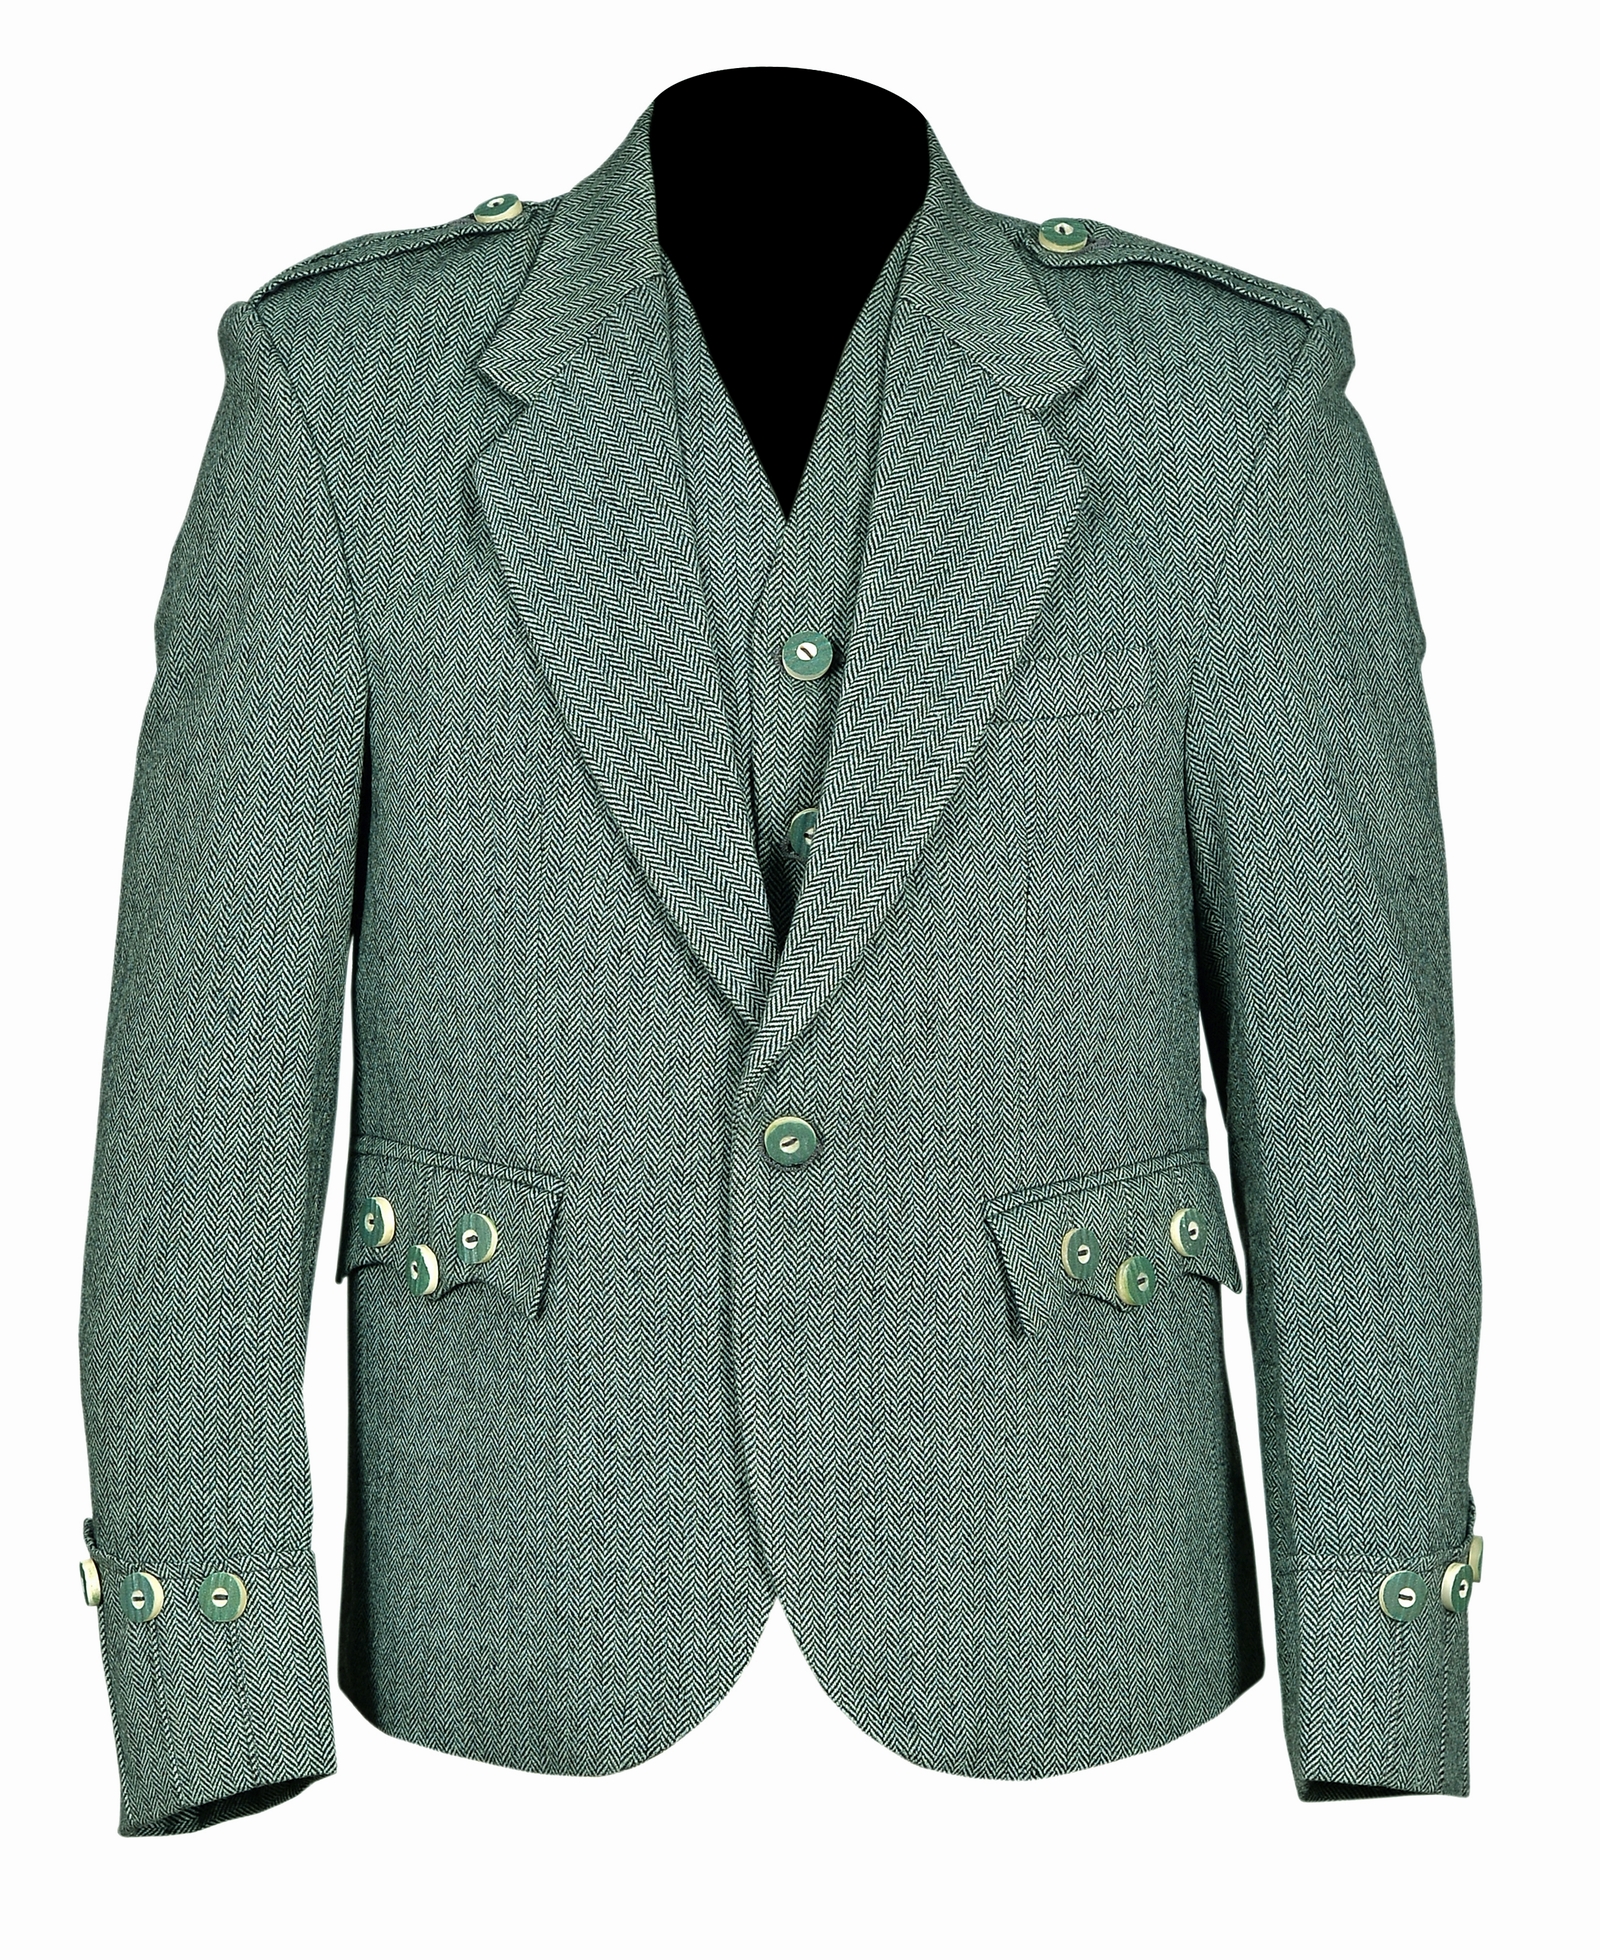 lovat green kilt jacket